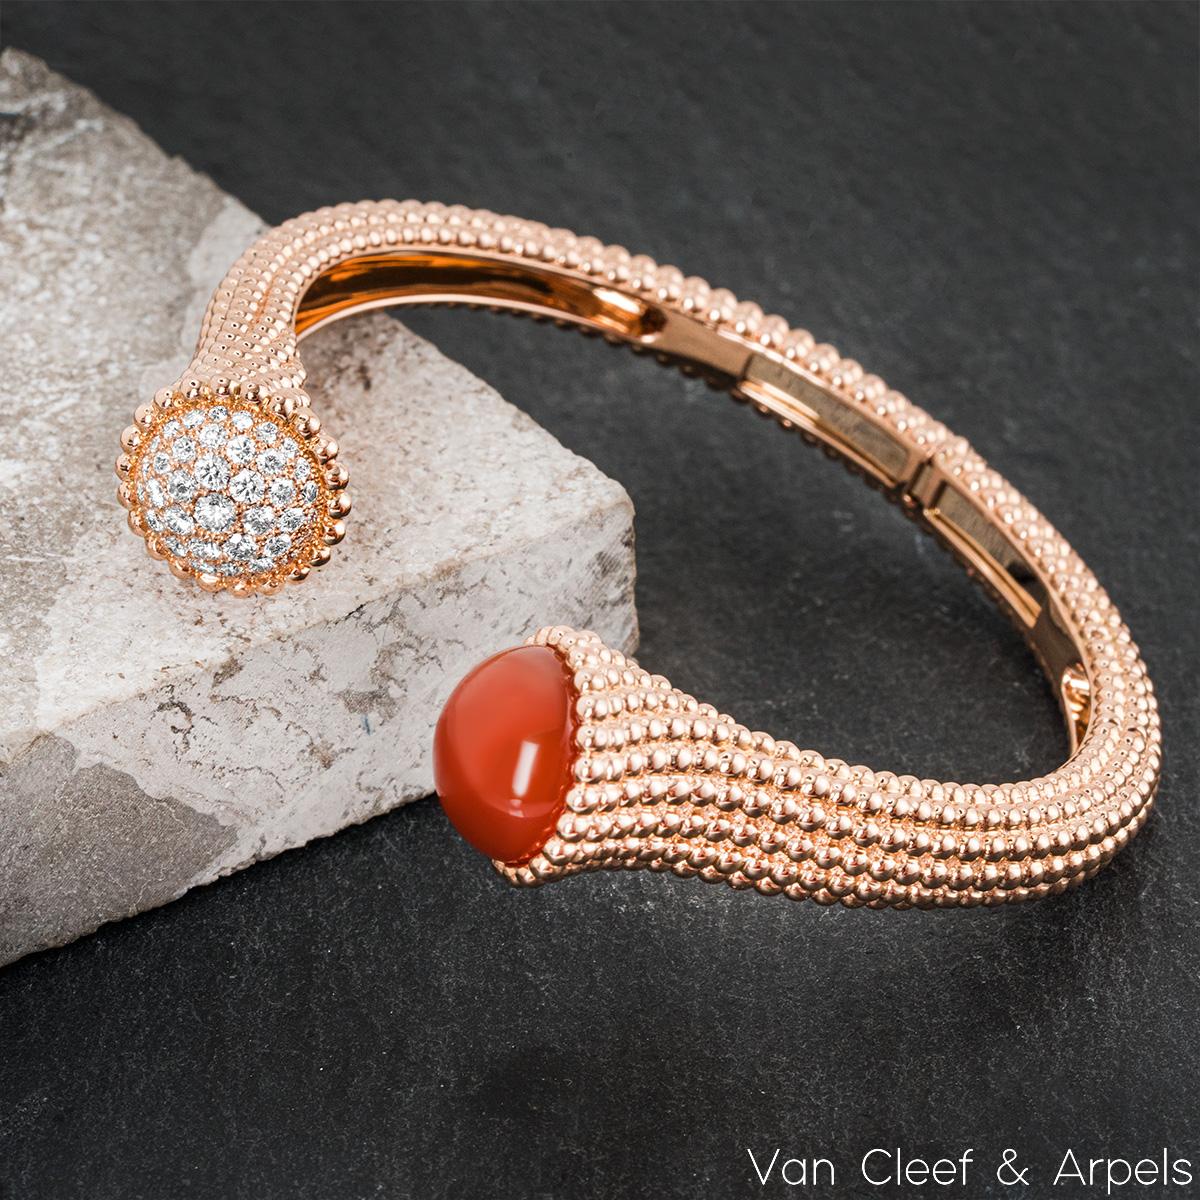 Van Cleef & Arpels Rose Gold Perlée Couleurs Small Bracelet VCARP27400 In Excellent Condition For Sale In London, GB